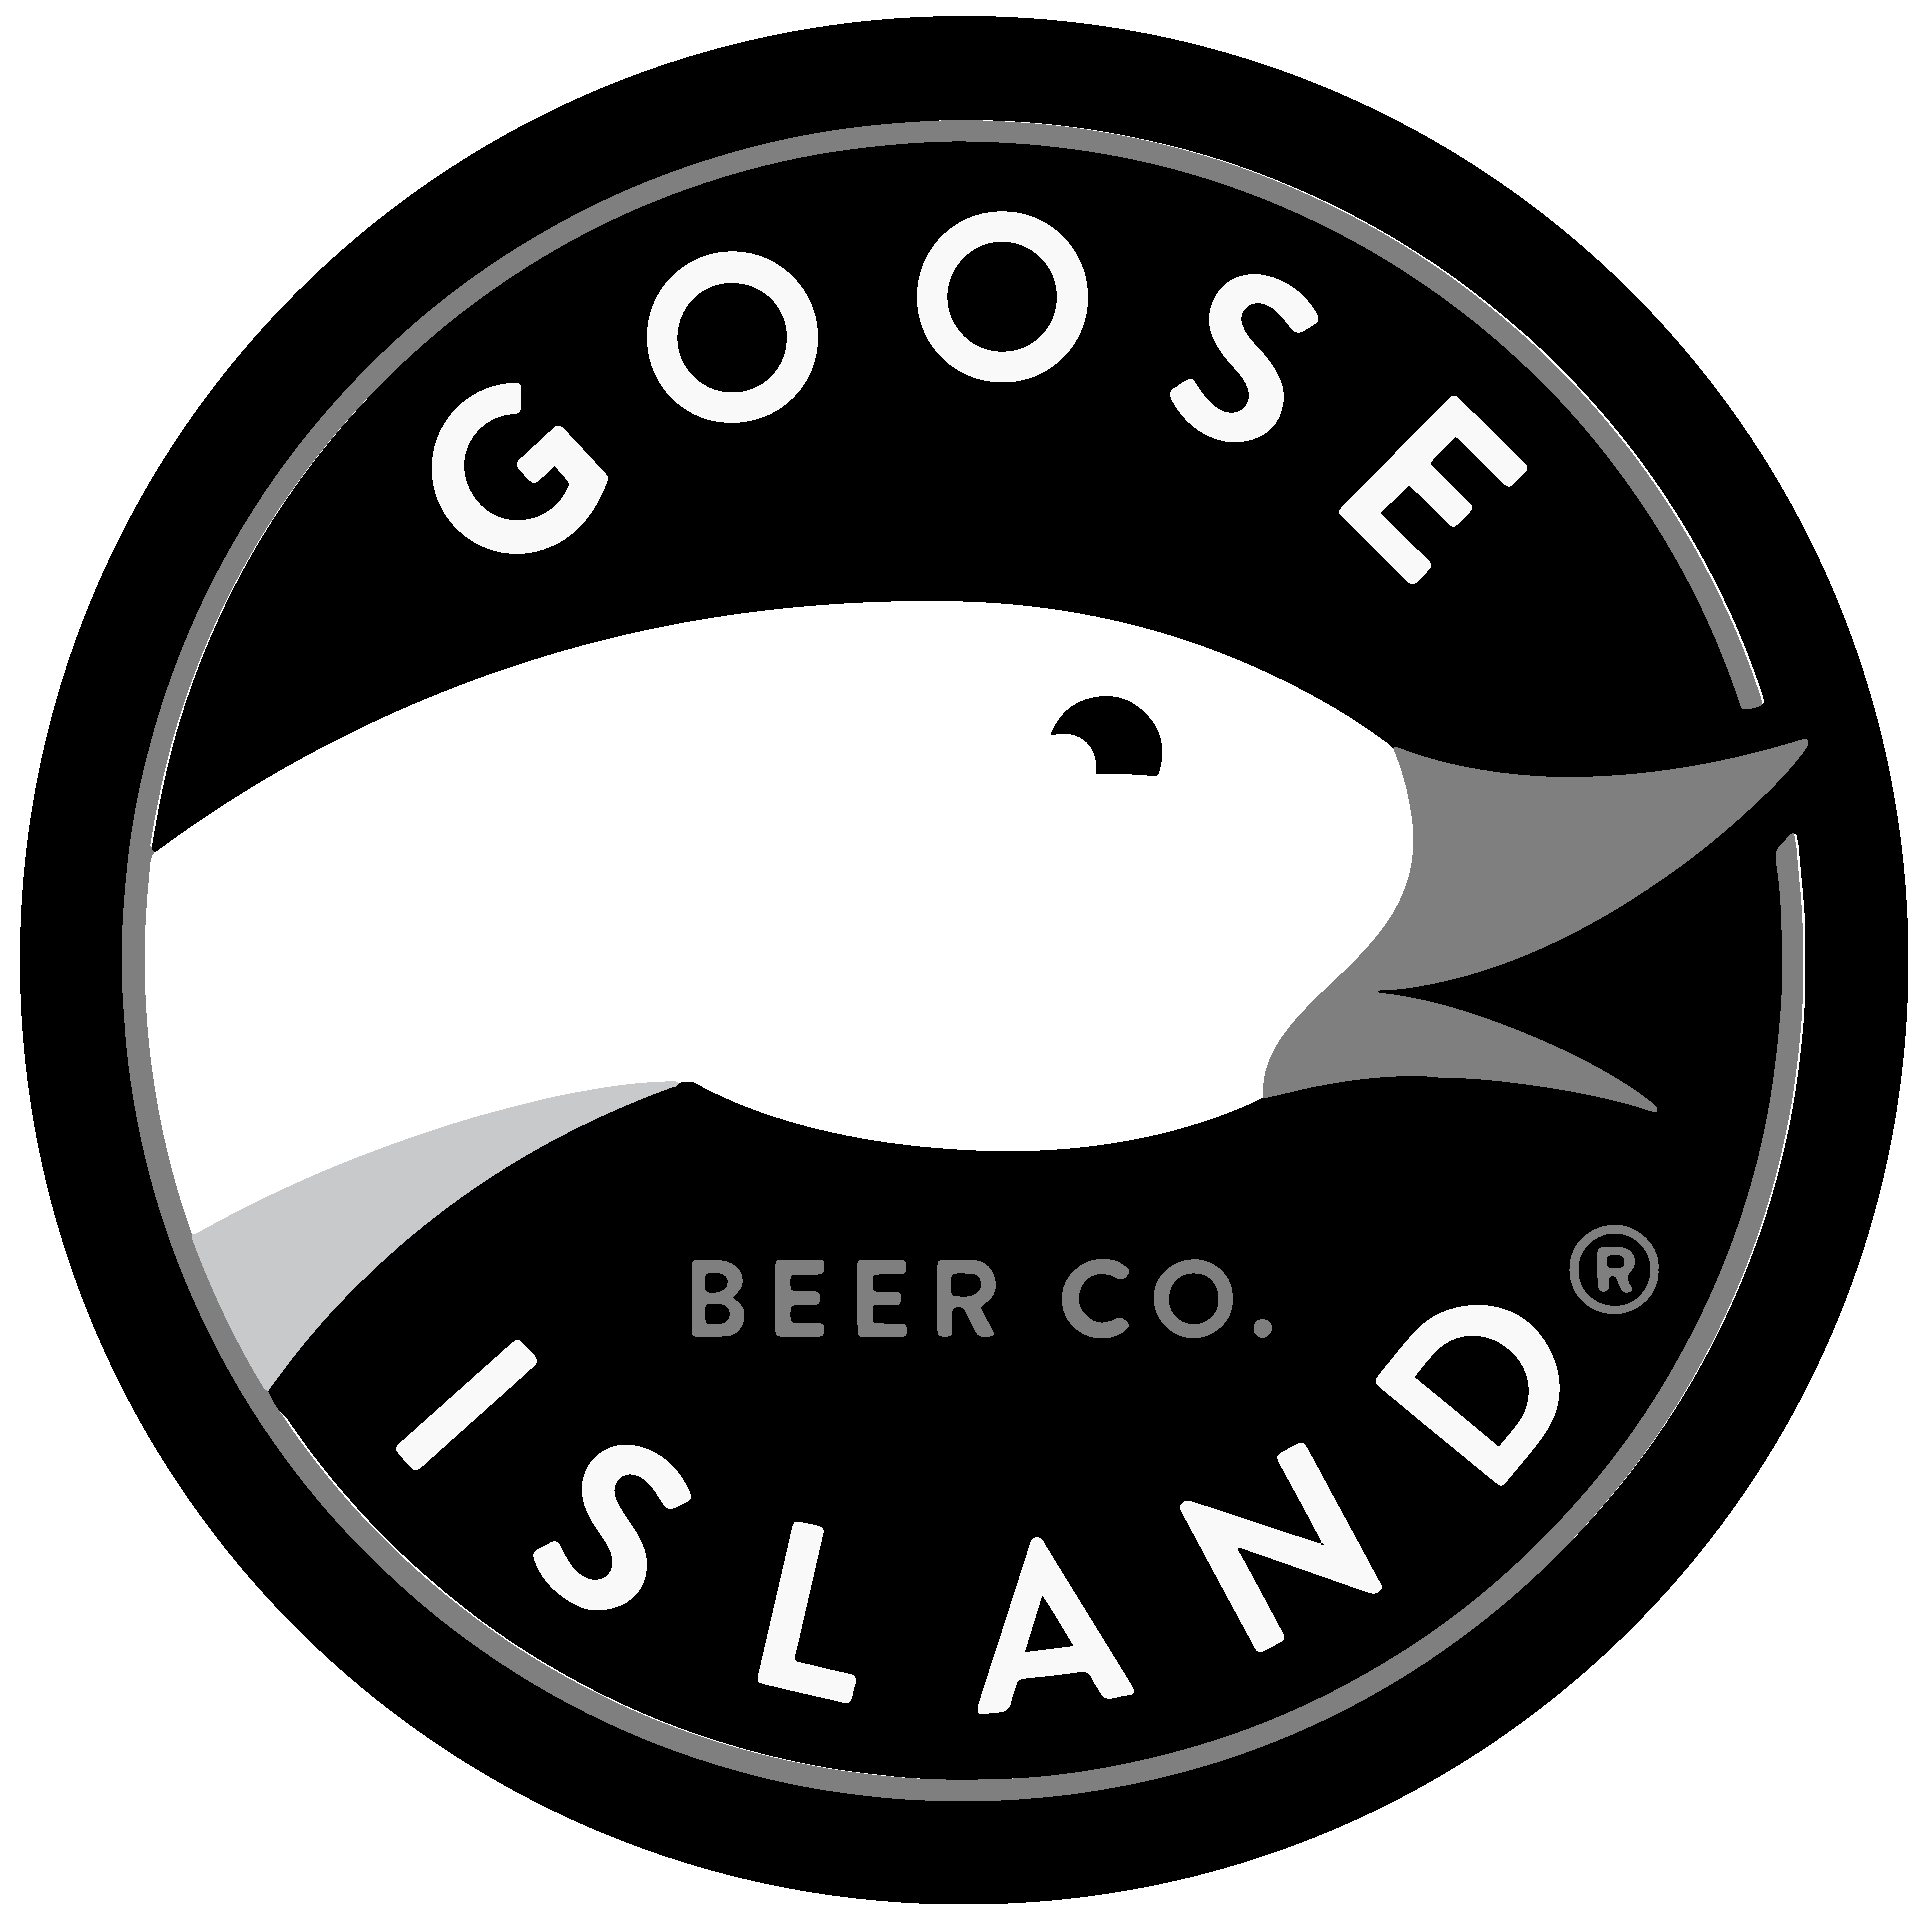 goose-island-seeklogo.com